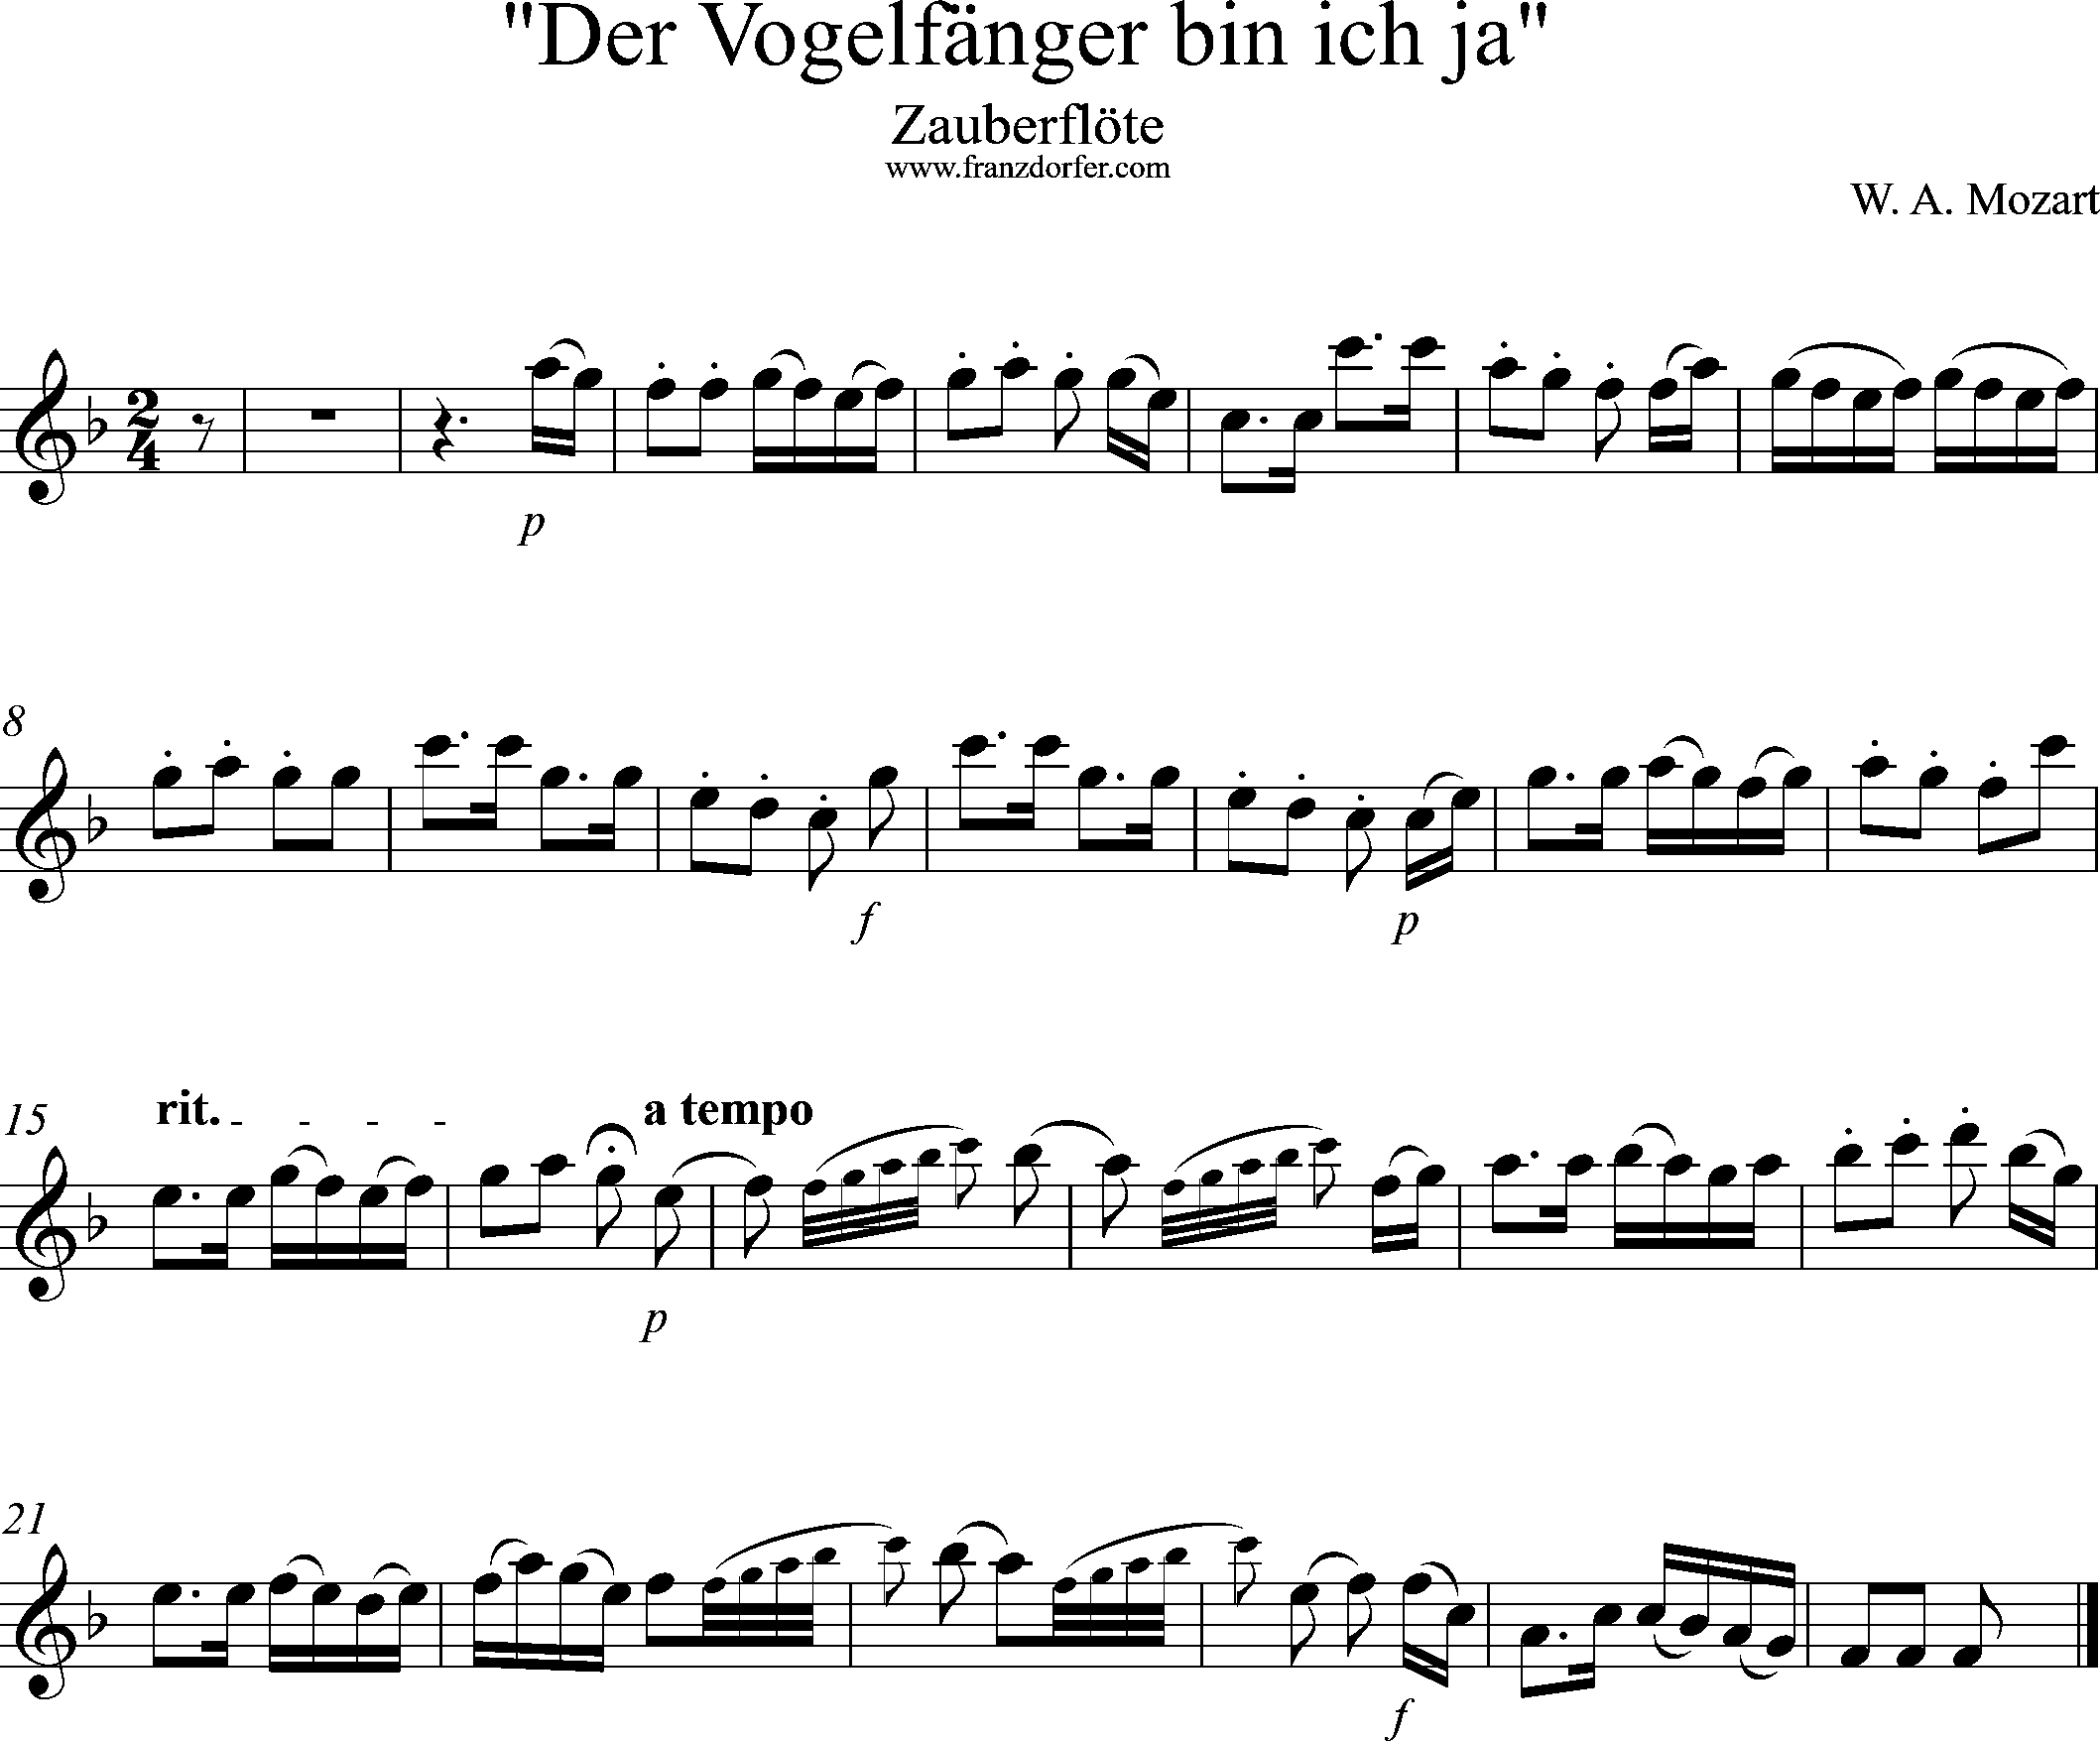 Uauberflöte, Vogelfängerlied, Solostimme, F-Dur